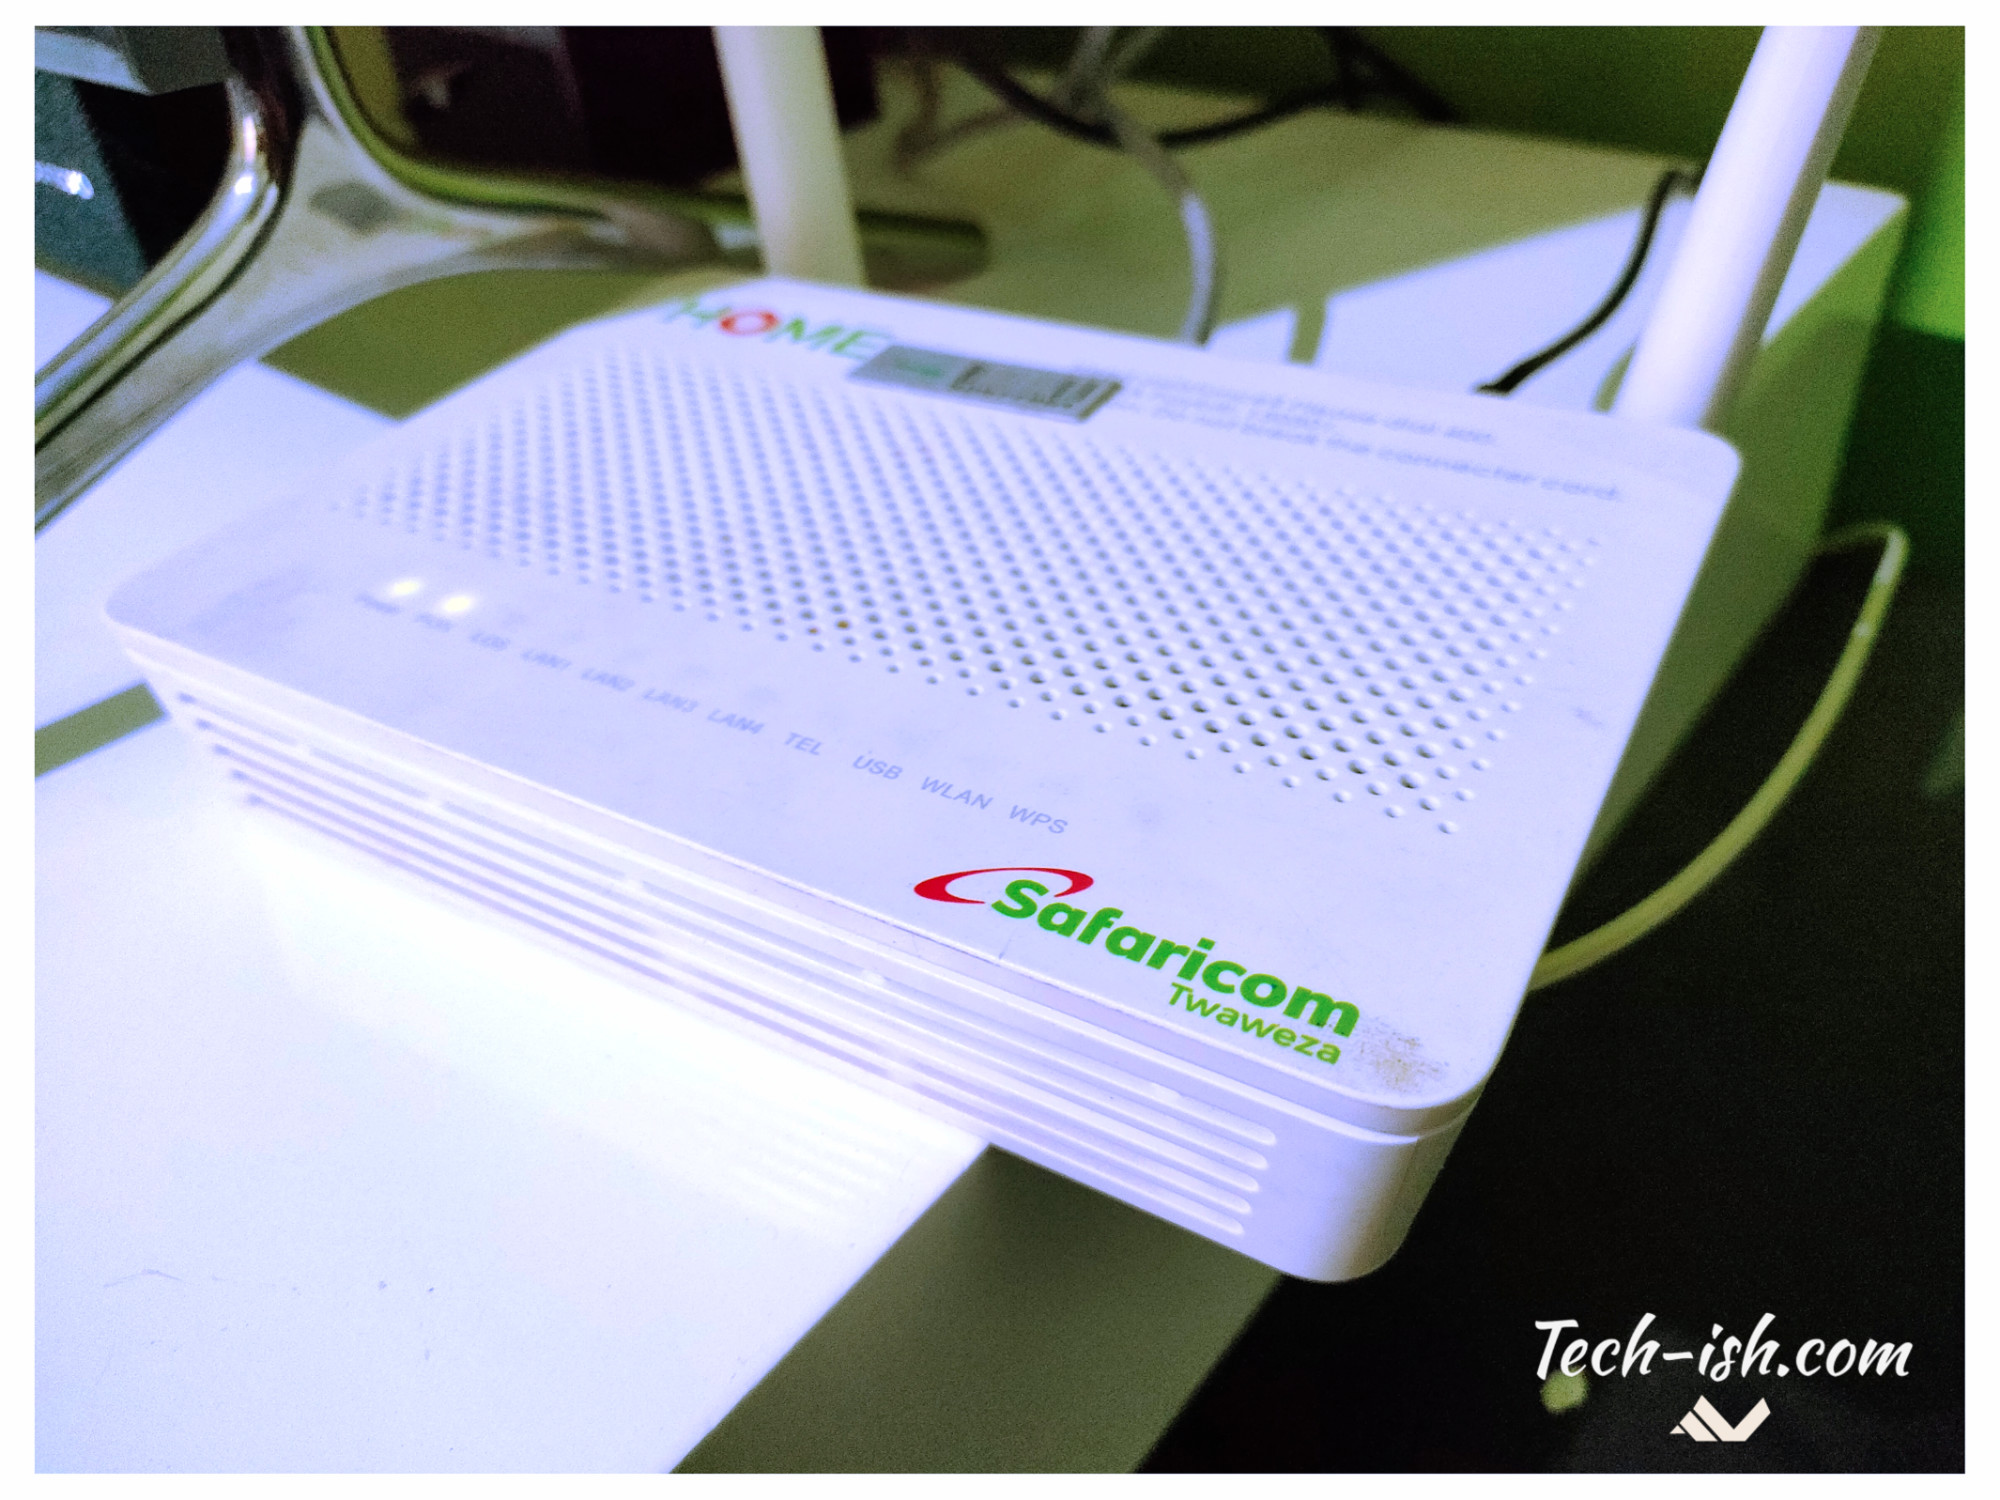 Router Safaricom Home Fibre Reports Impressive Growth in Fibre and Fixed Enterprise Sectors